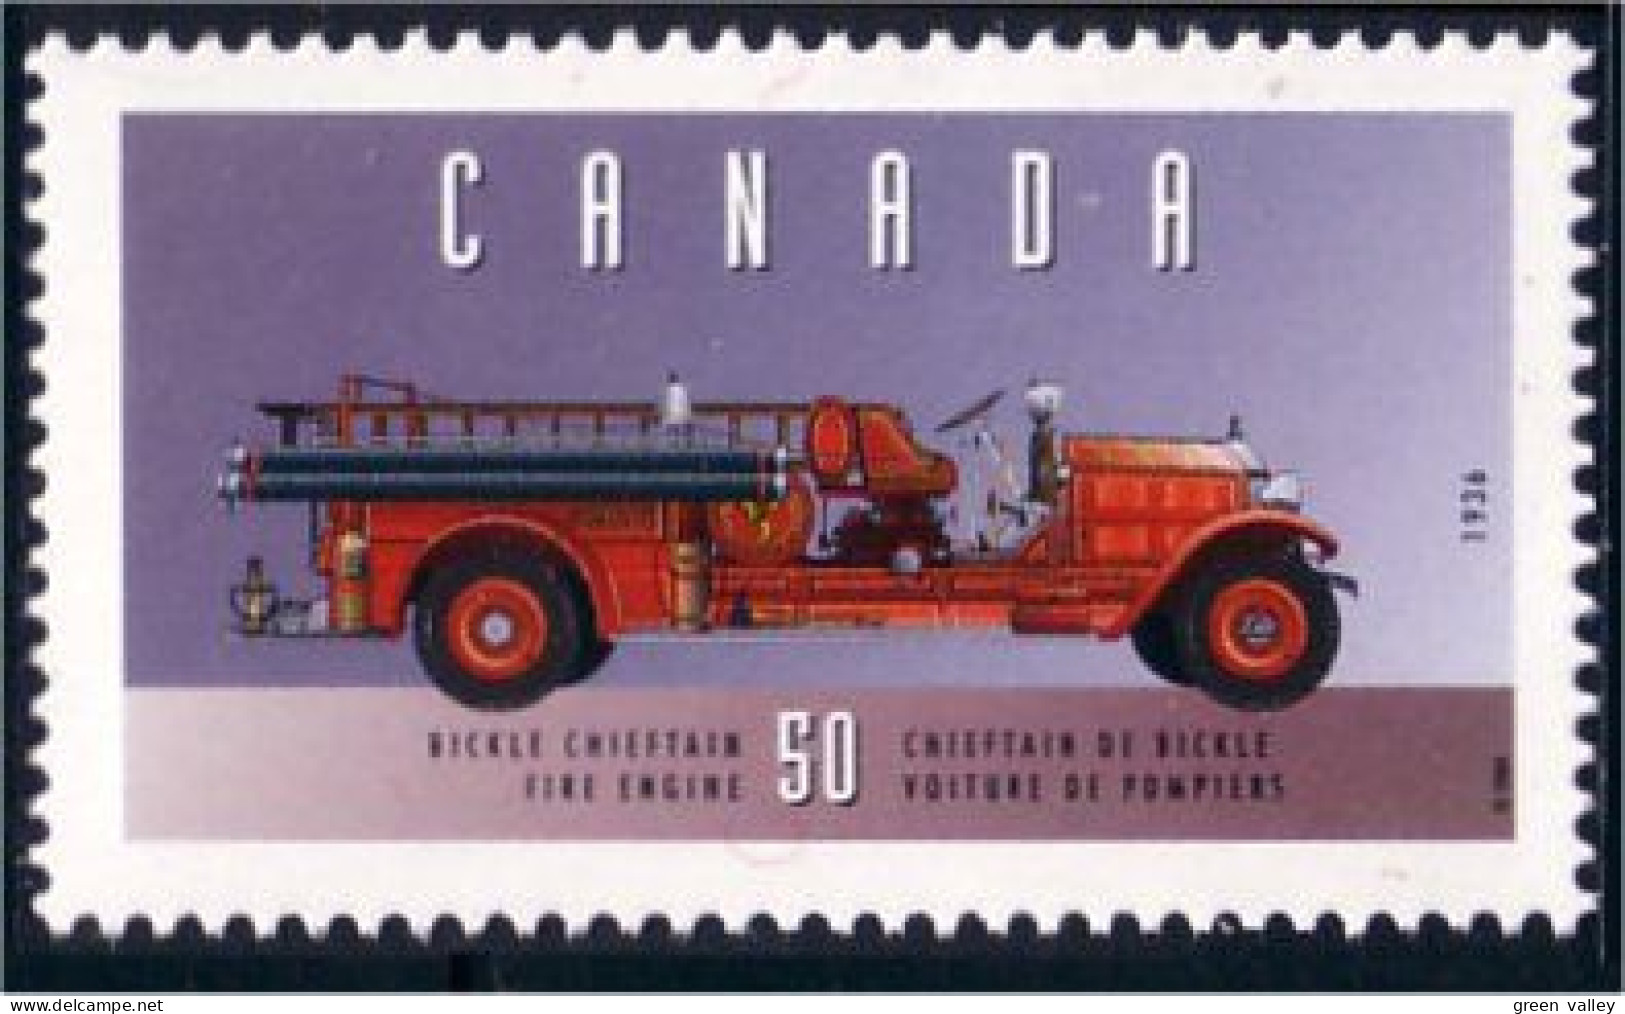 Canada Camion Pompier Bickle Chieftain Fire Engine MNH ** Neuf SC (C15-27dd) - Vrachtwagens